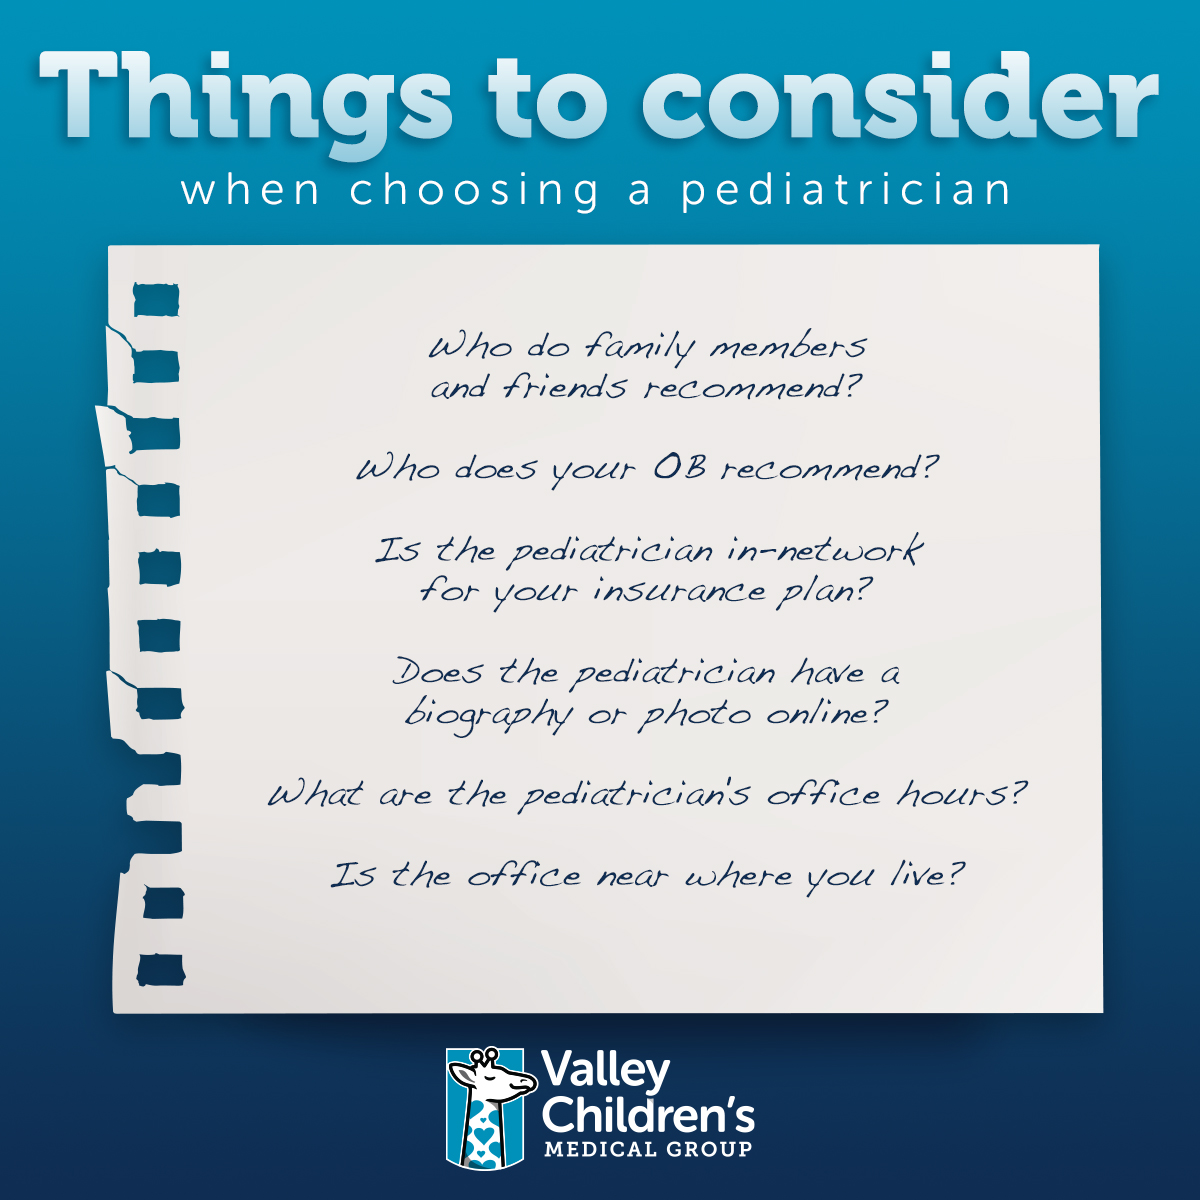 Things to consider when choosing a pediatrician